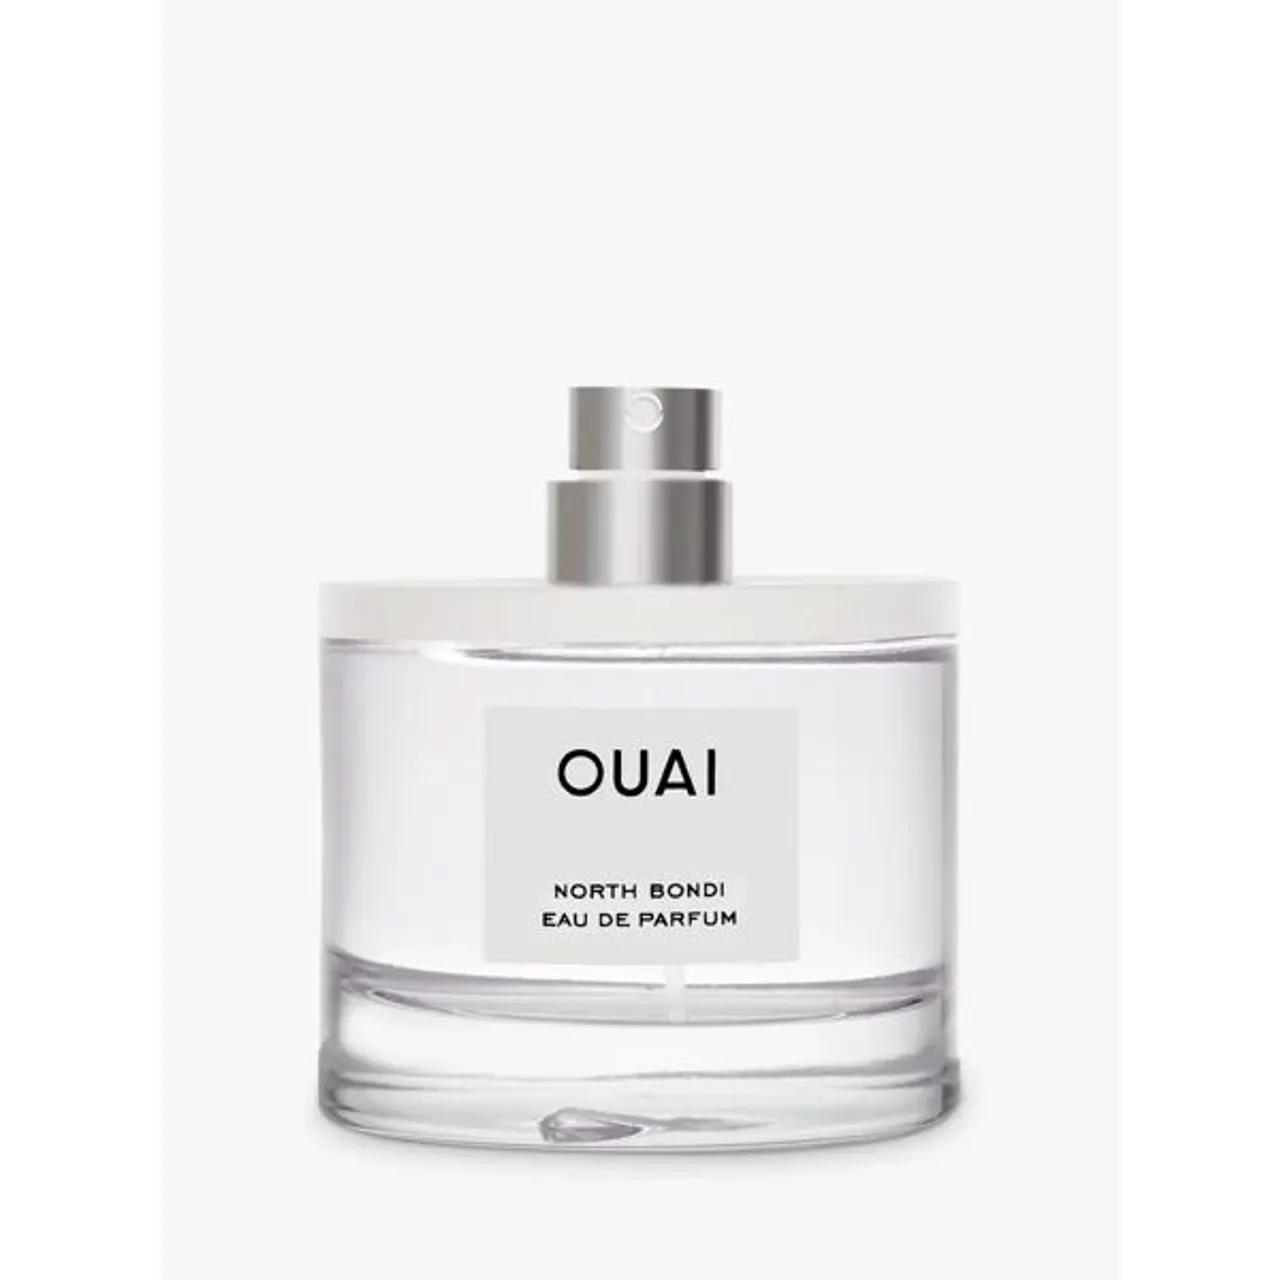 OUAI North Bondi Eau de Parfum, 50ml - Female - Size: 50ml